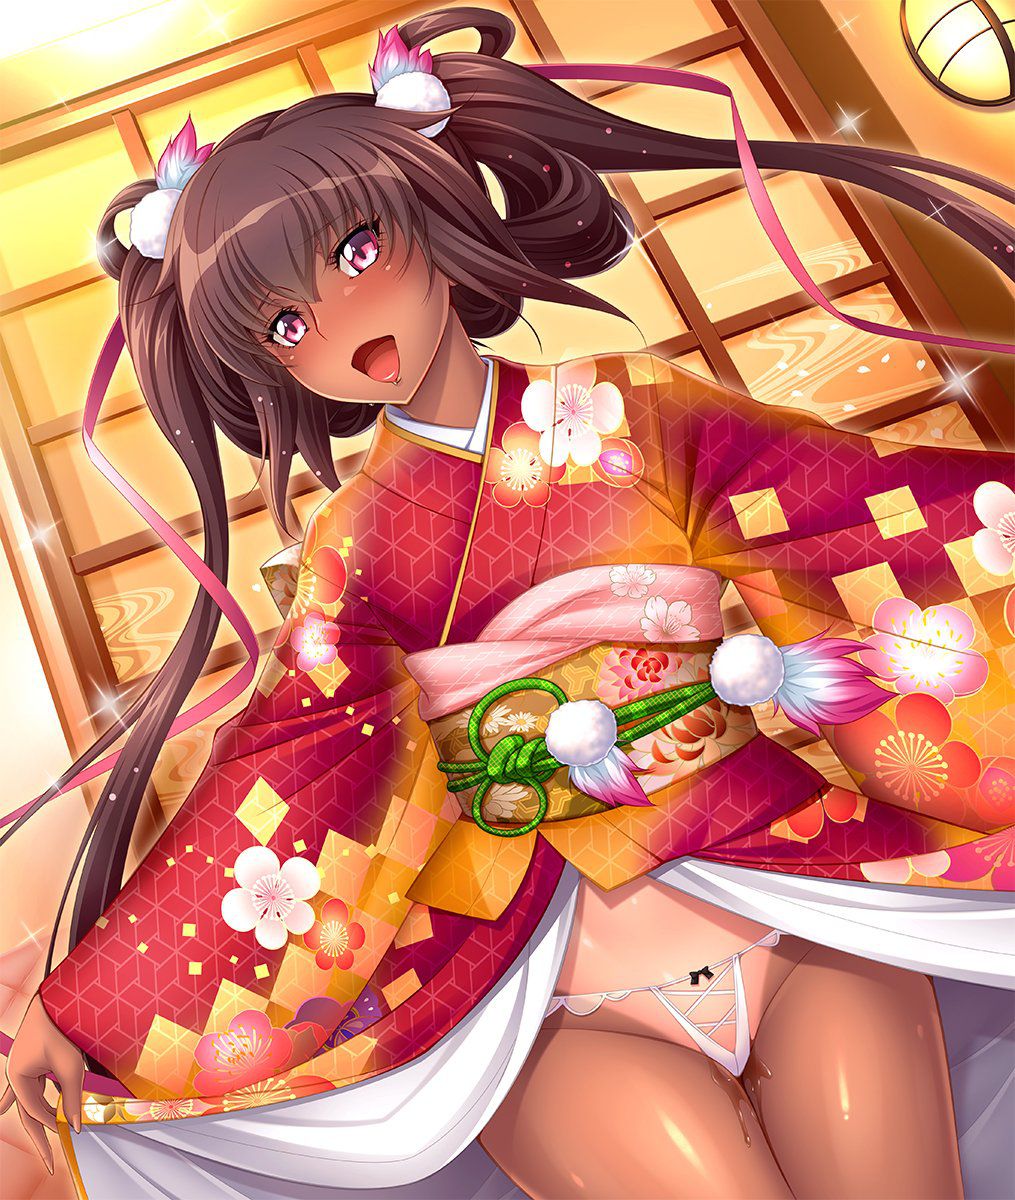 [2nd] The disturbed kimono figure is erotic erotic girl secondary erotic image part 18 [Kimono] 27